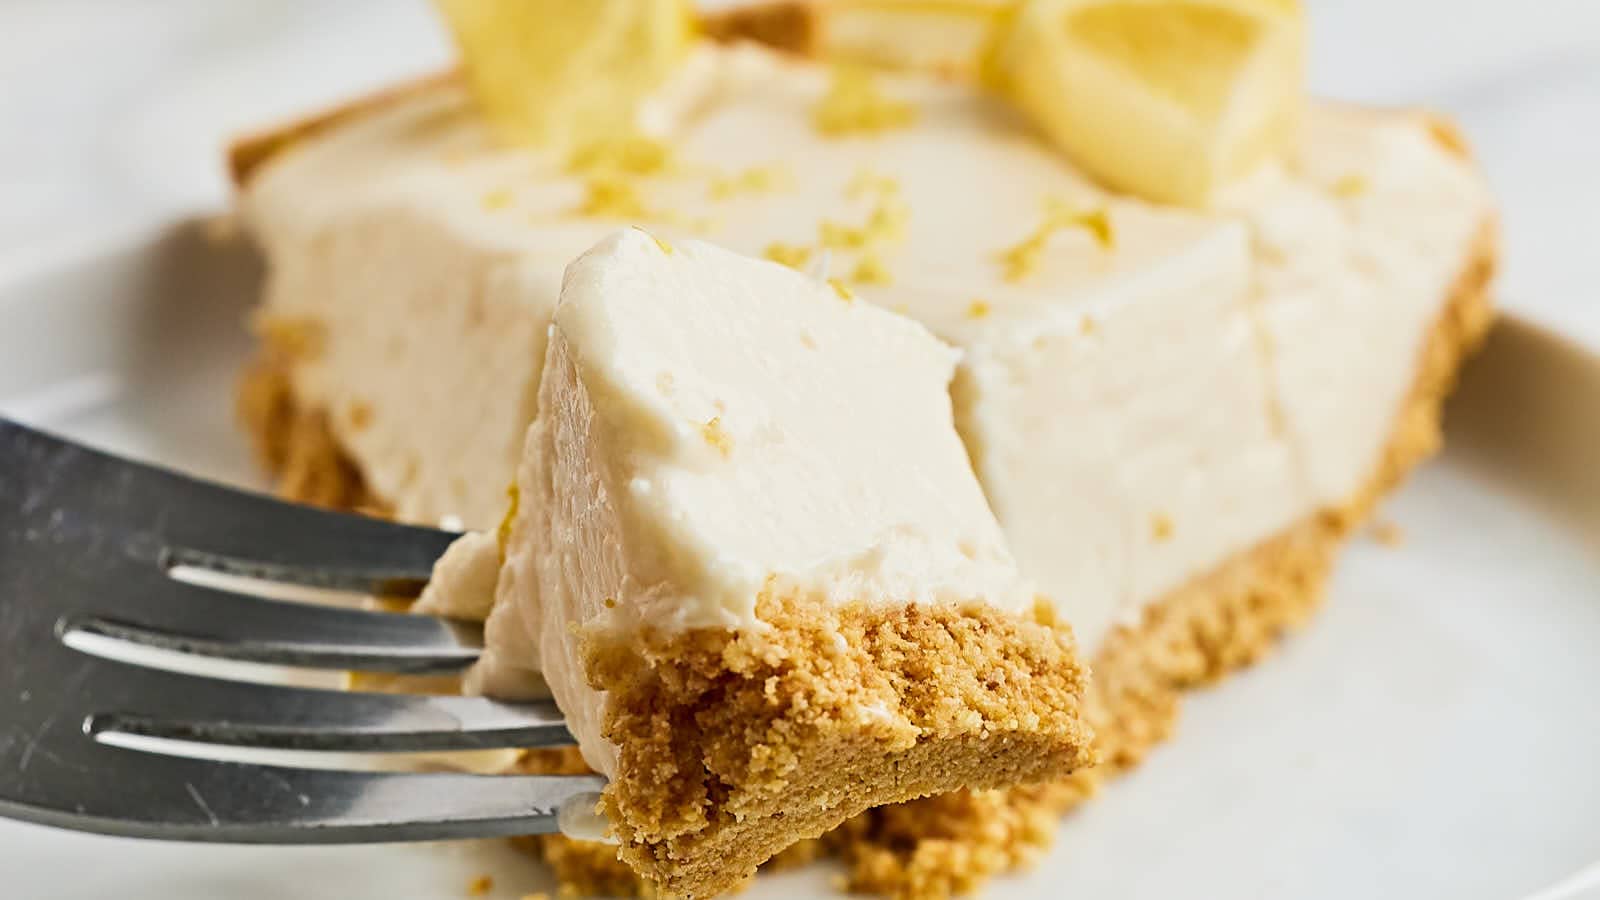 Lemon Cheesecake recipe by Cheerful Cook.